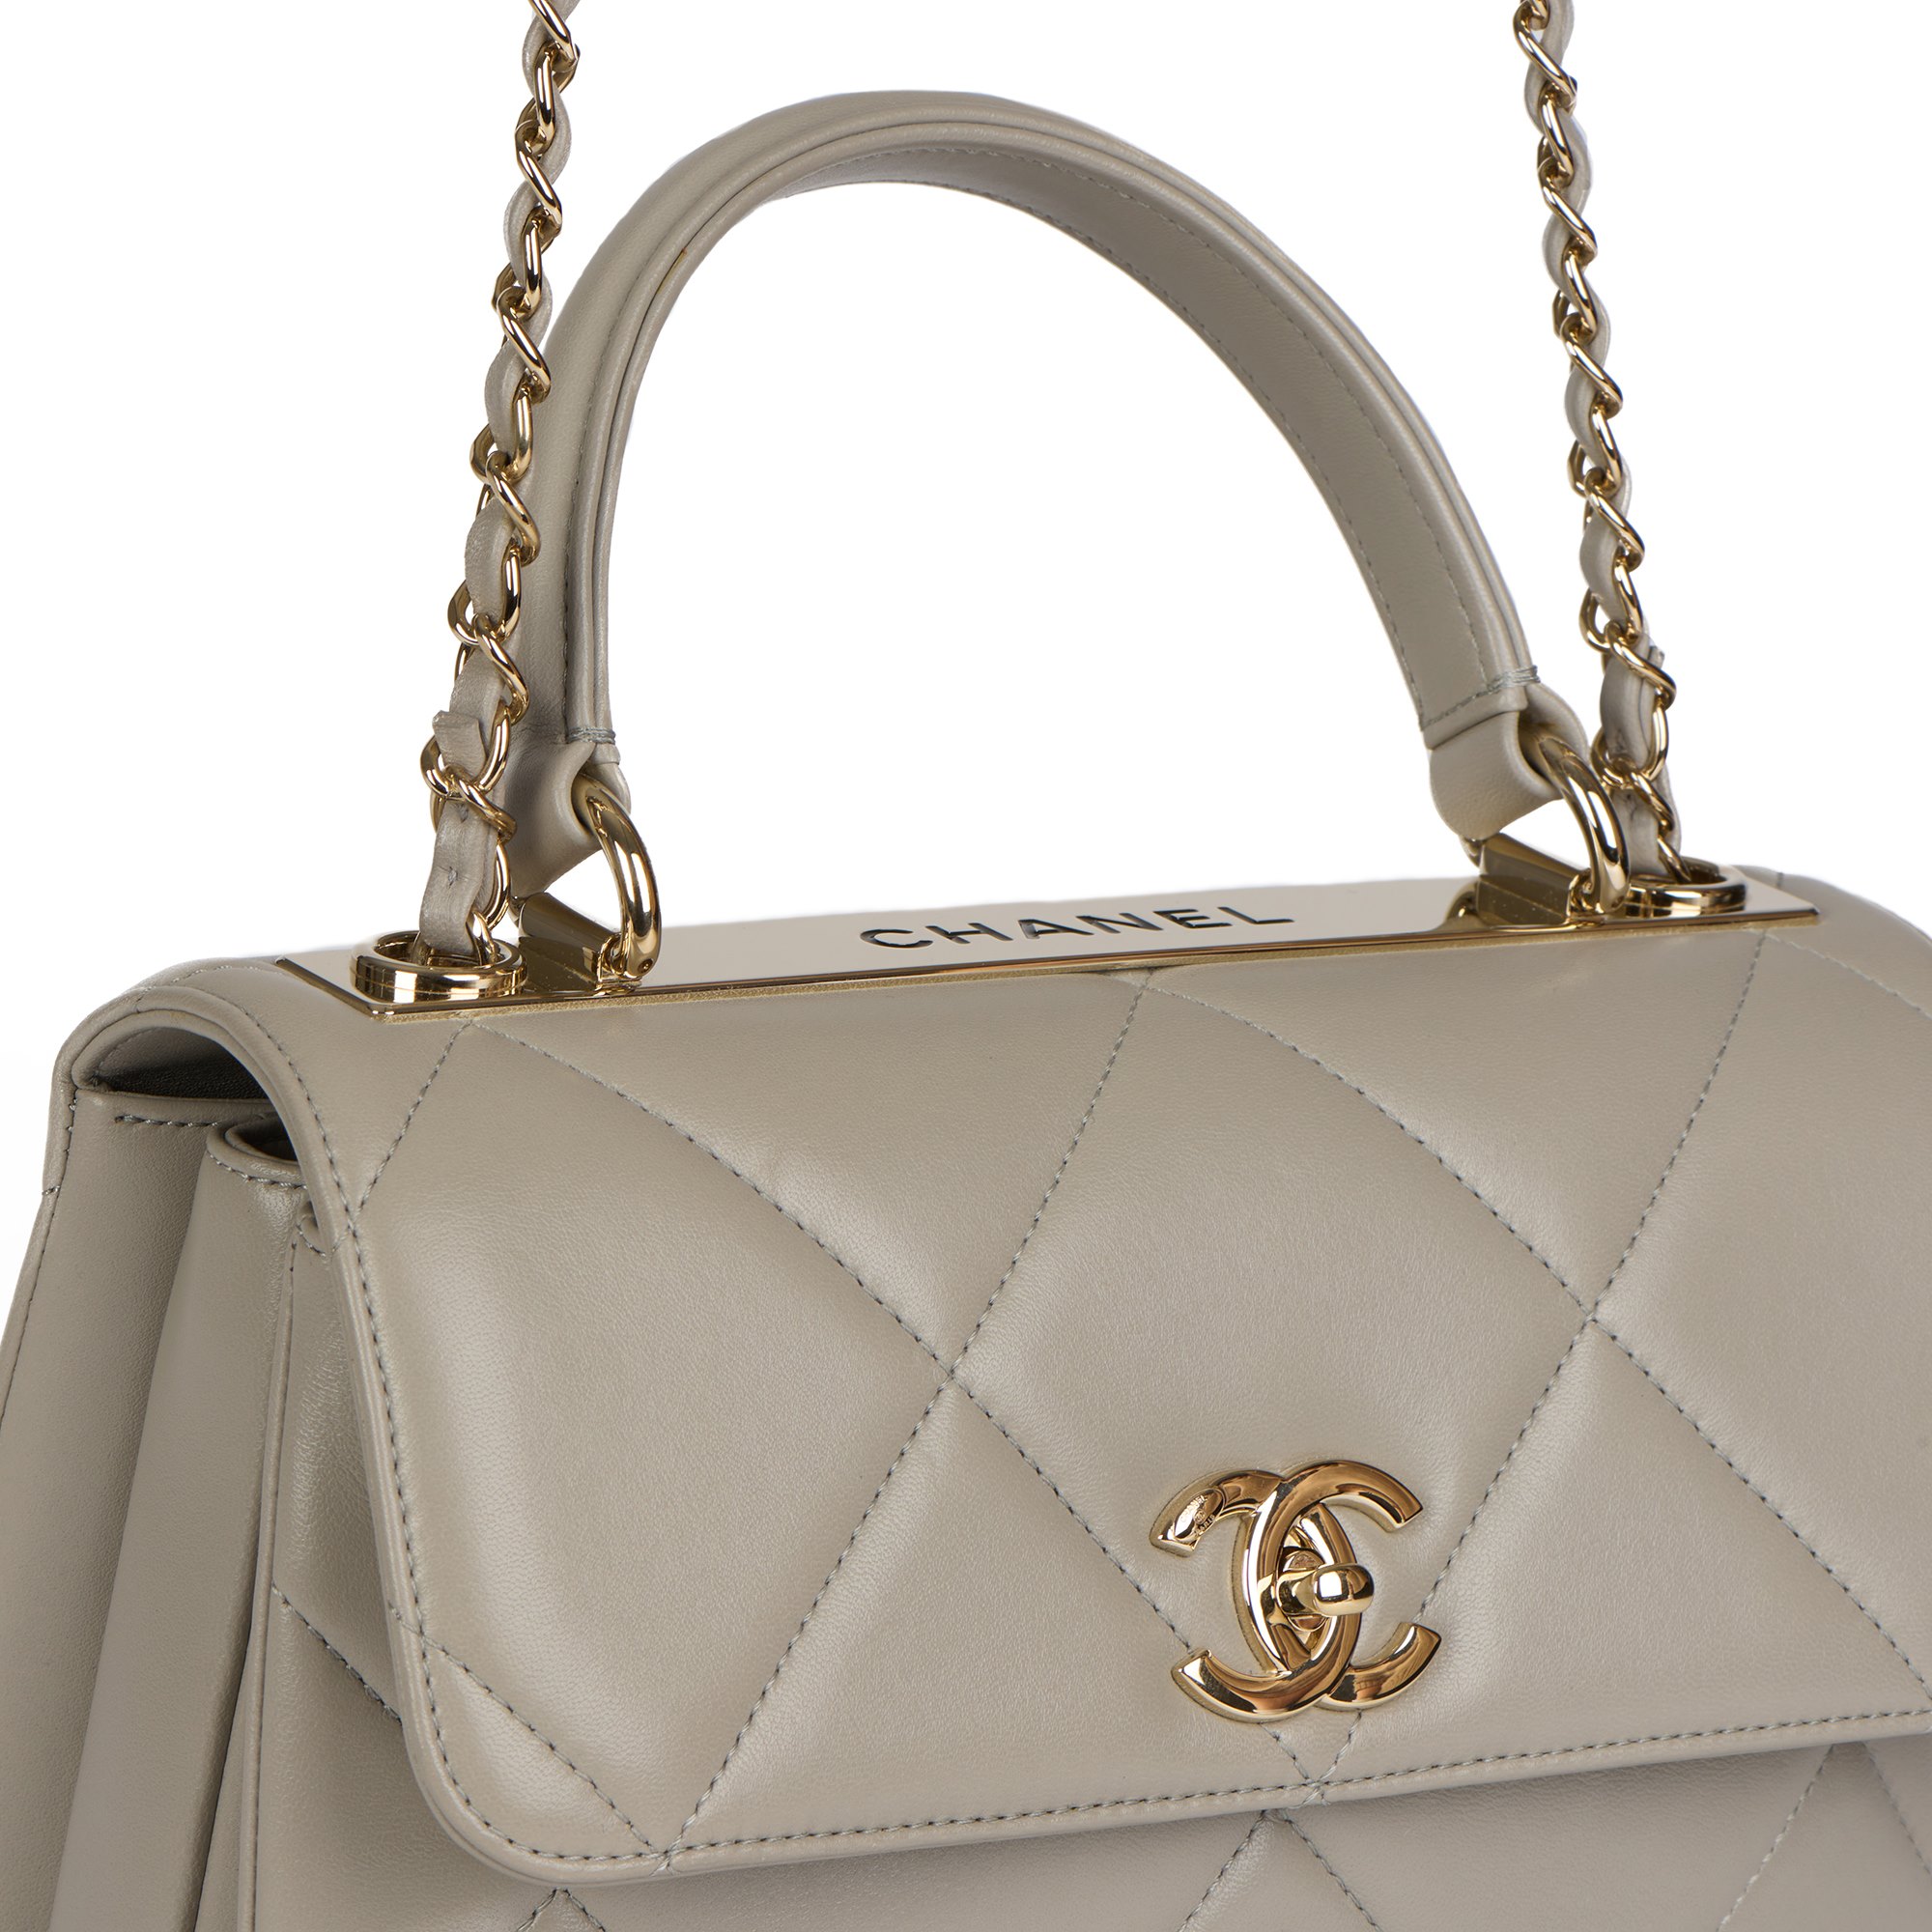 Chanel Small Trendy CC Top Handle Flap Bag 2019 CB502 | Second Hand Handbags